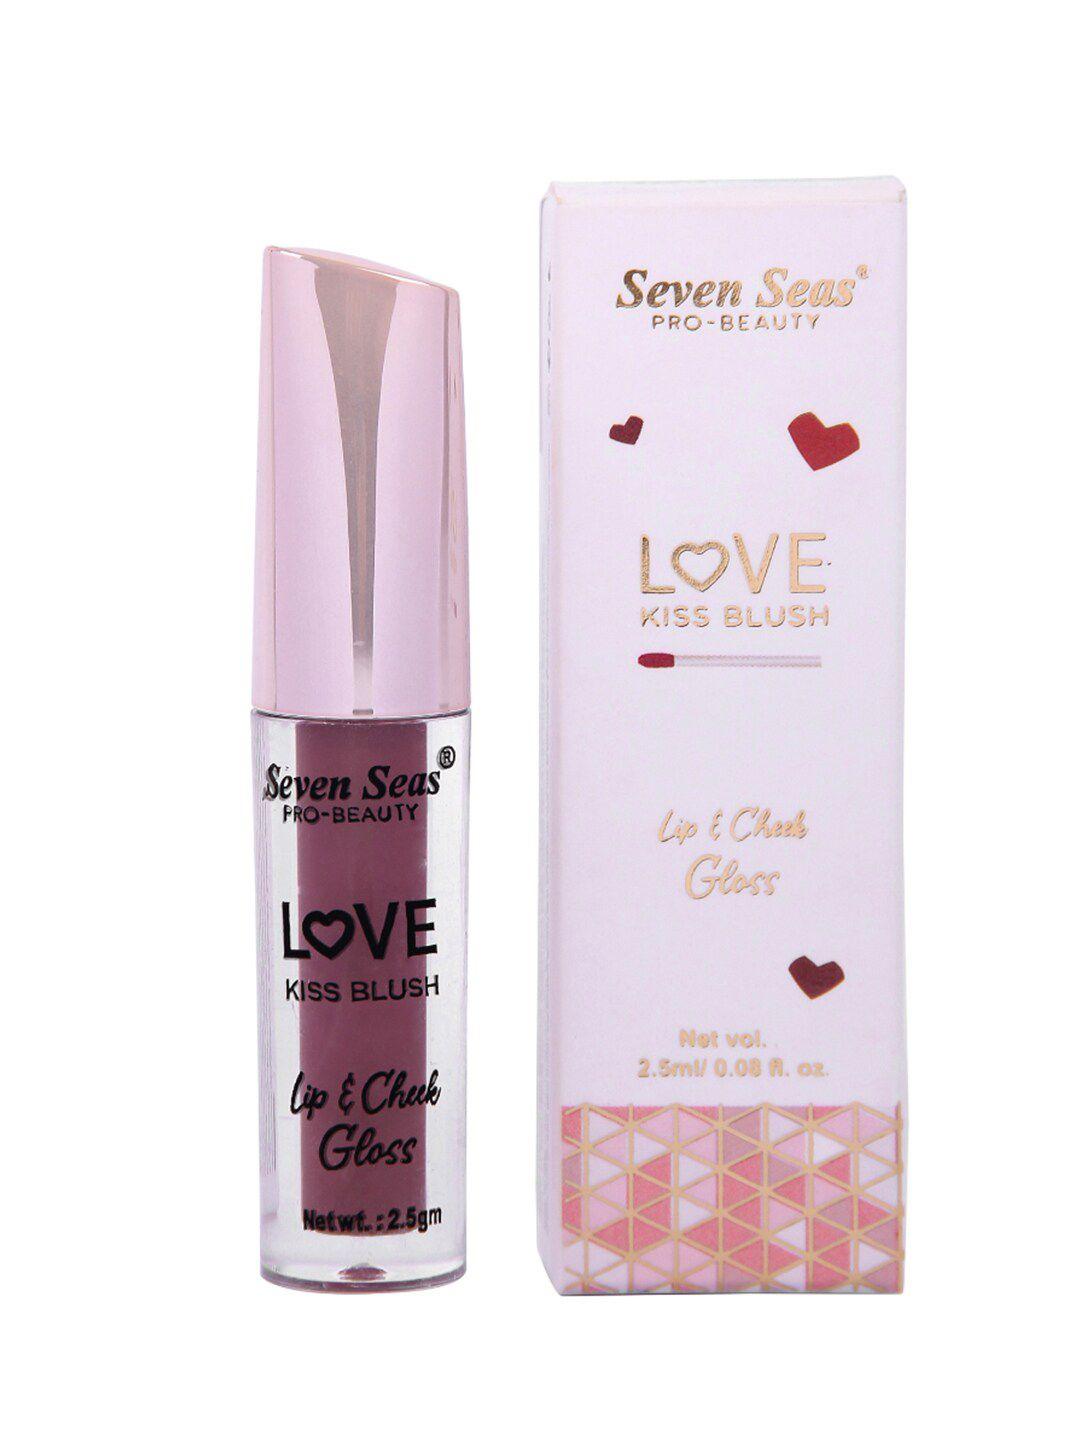 seven seas love kiss blush highly pigmented lip & cheek gloss - 2.5g - plum kiss 106